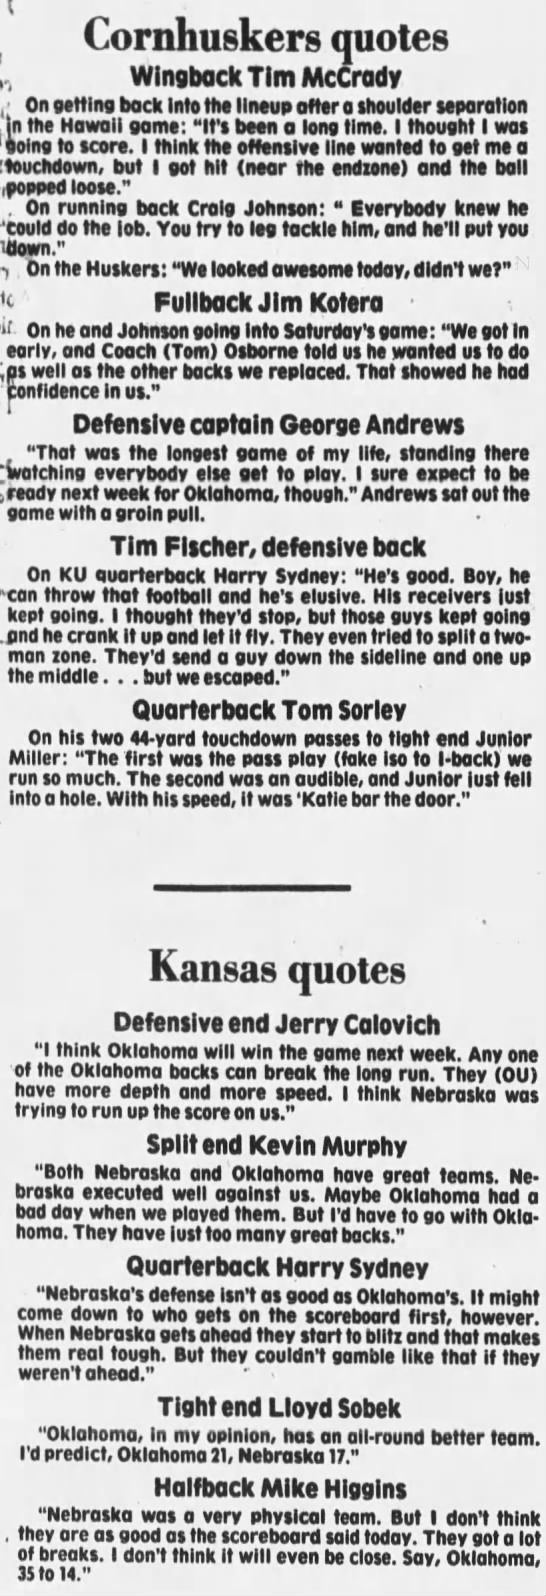 1978 Nebraska-Kansas postgame quotes - 